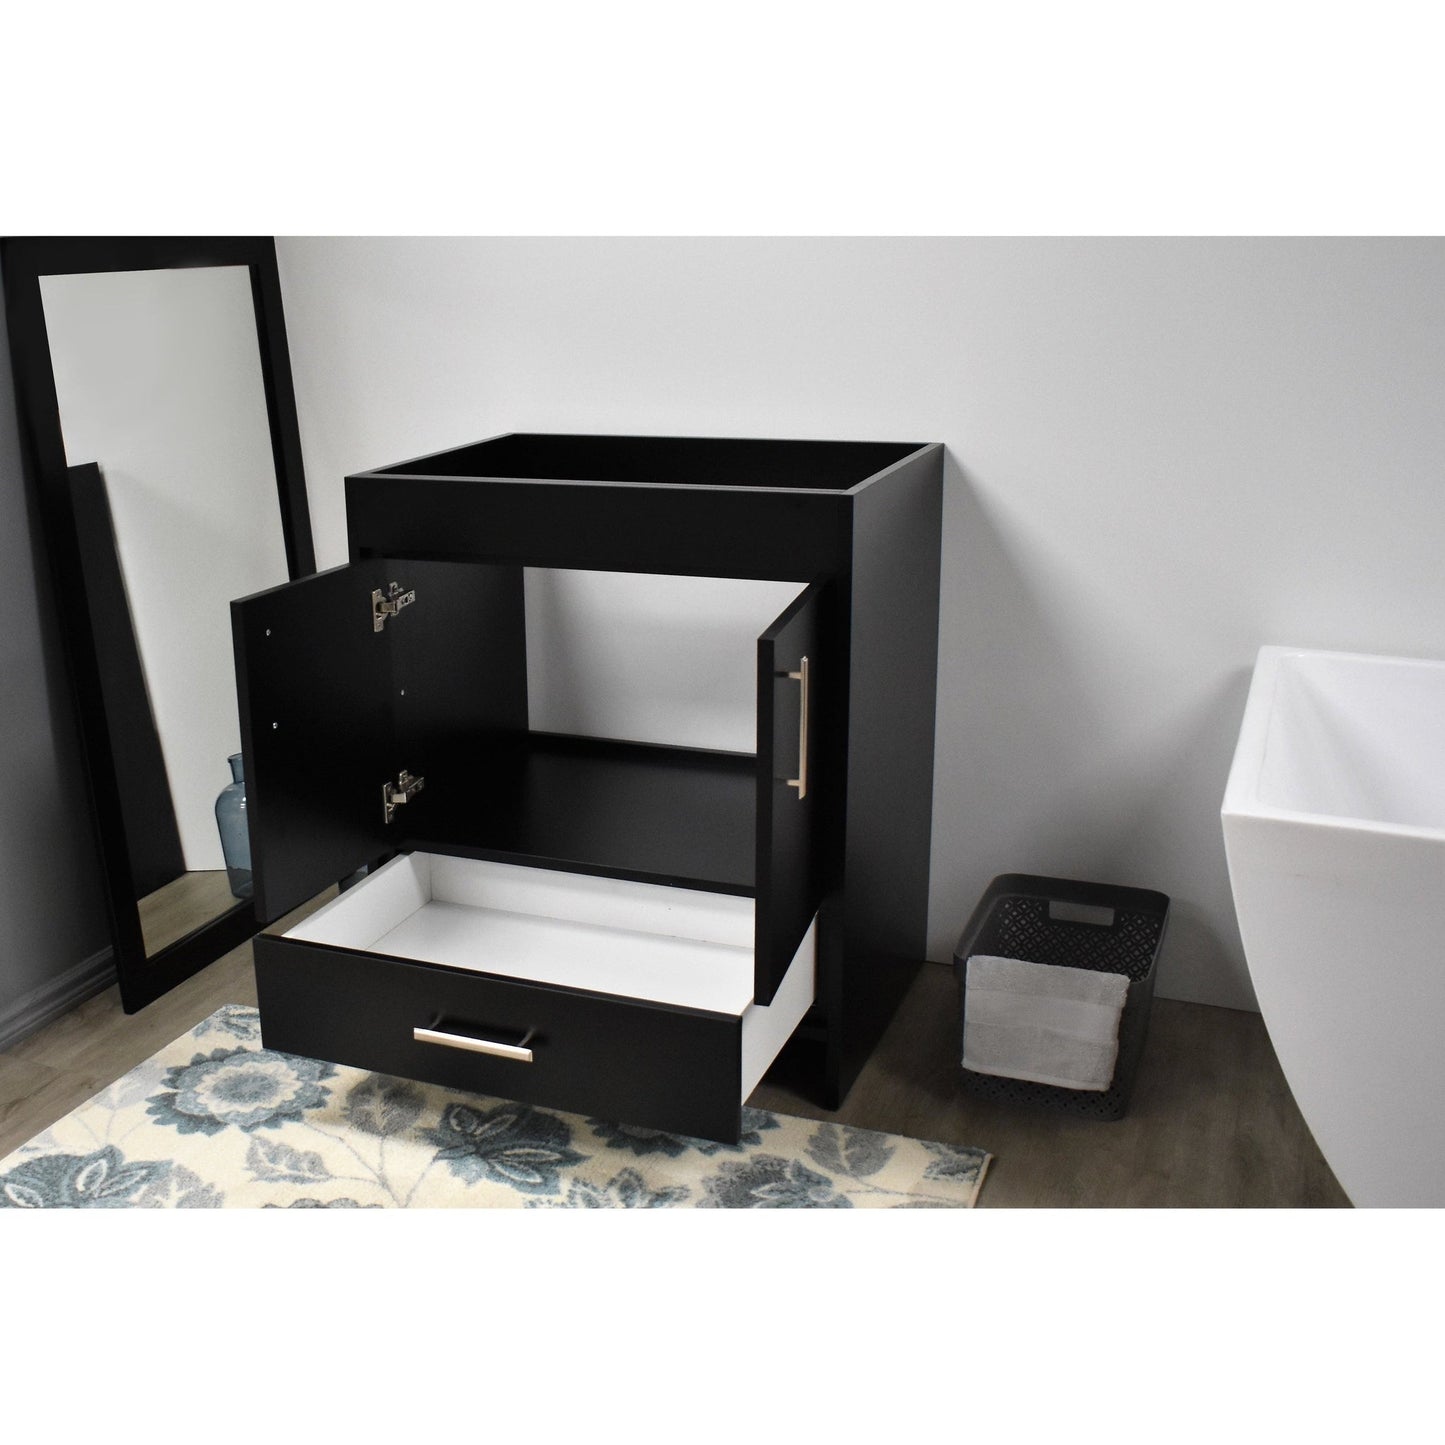 Volpa USA Capri 30" x 22" Black Modern Bathroom Vanity With Brushed Nickel Edge Handles